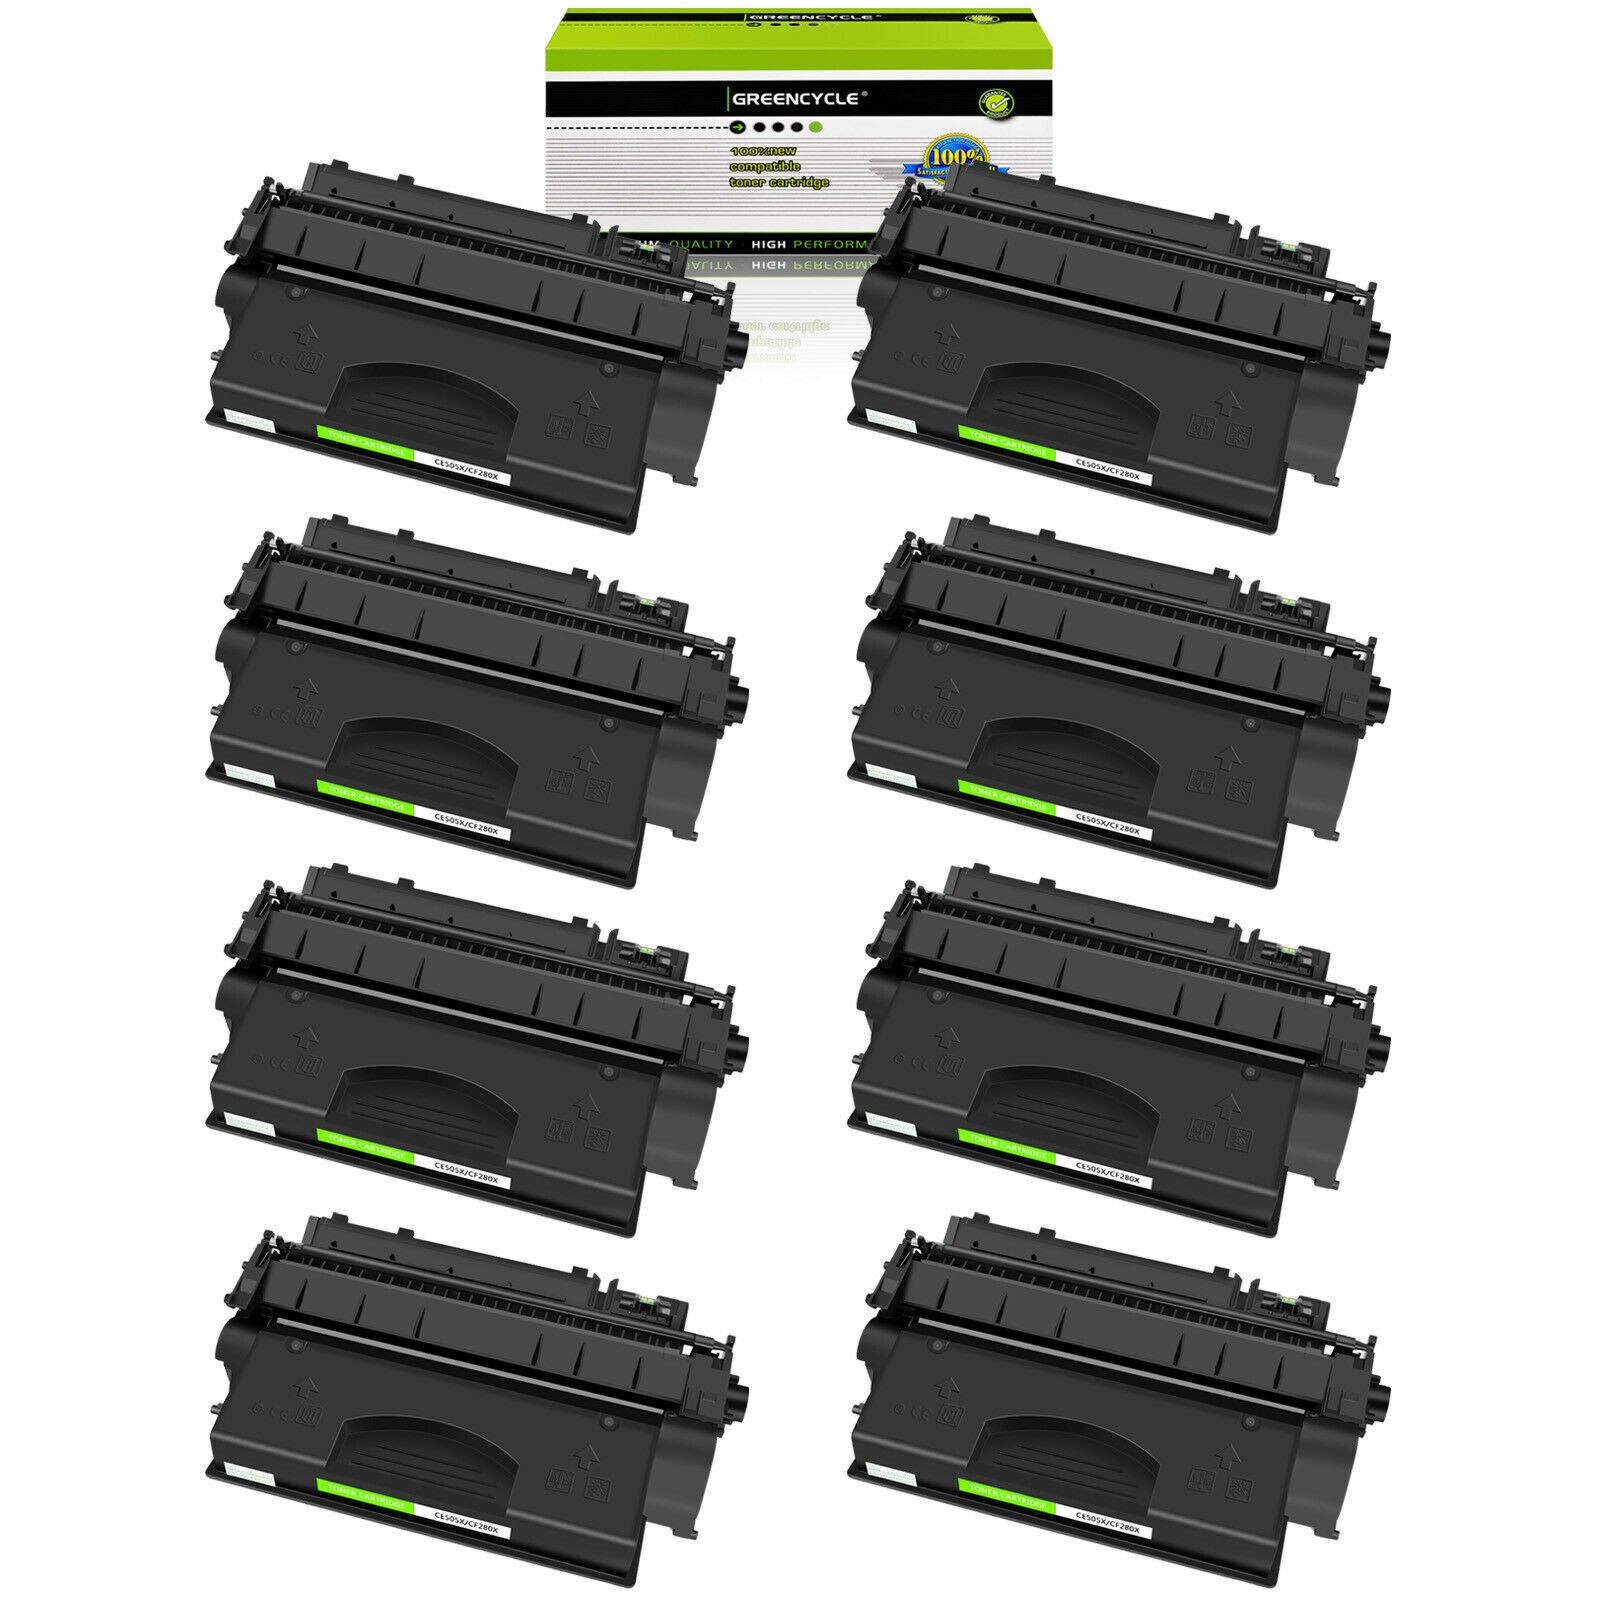 8x High Yield CF280X Black Toner Fits For HP Laserjet Pro 400 M401a M401d M401dw